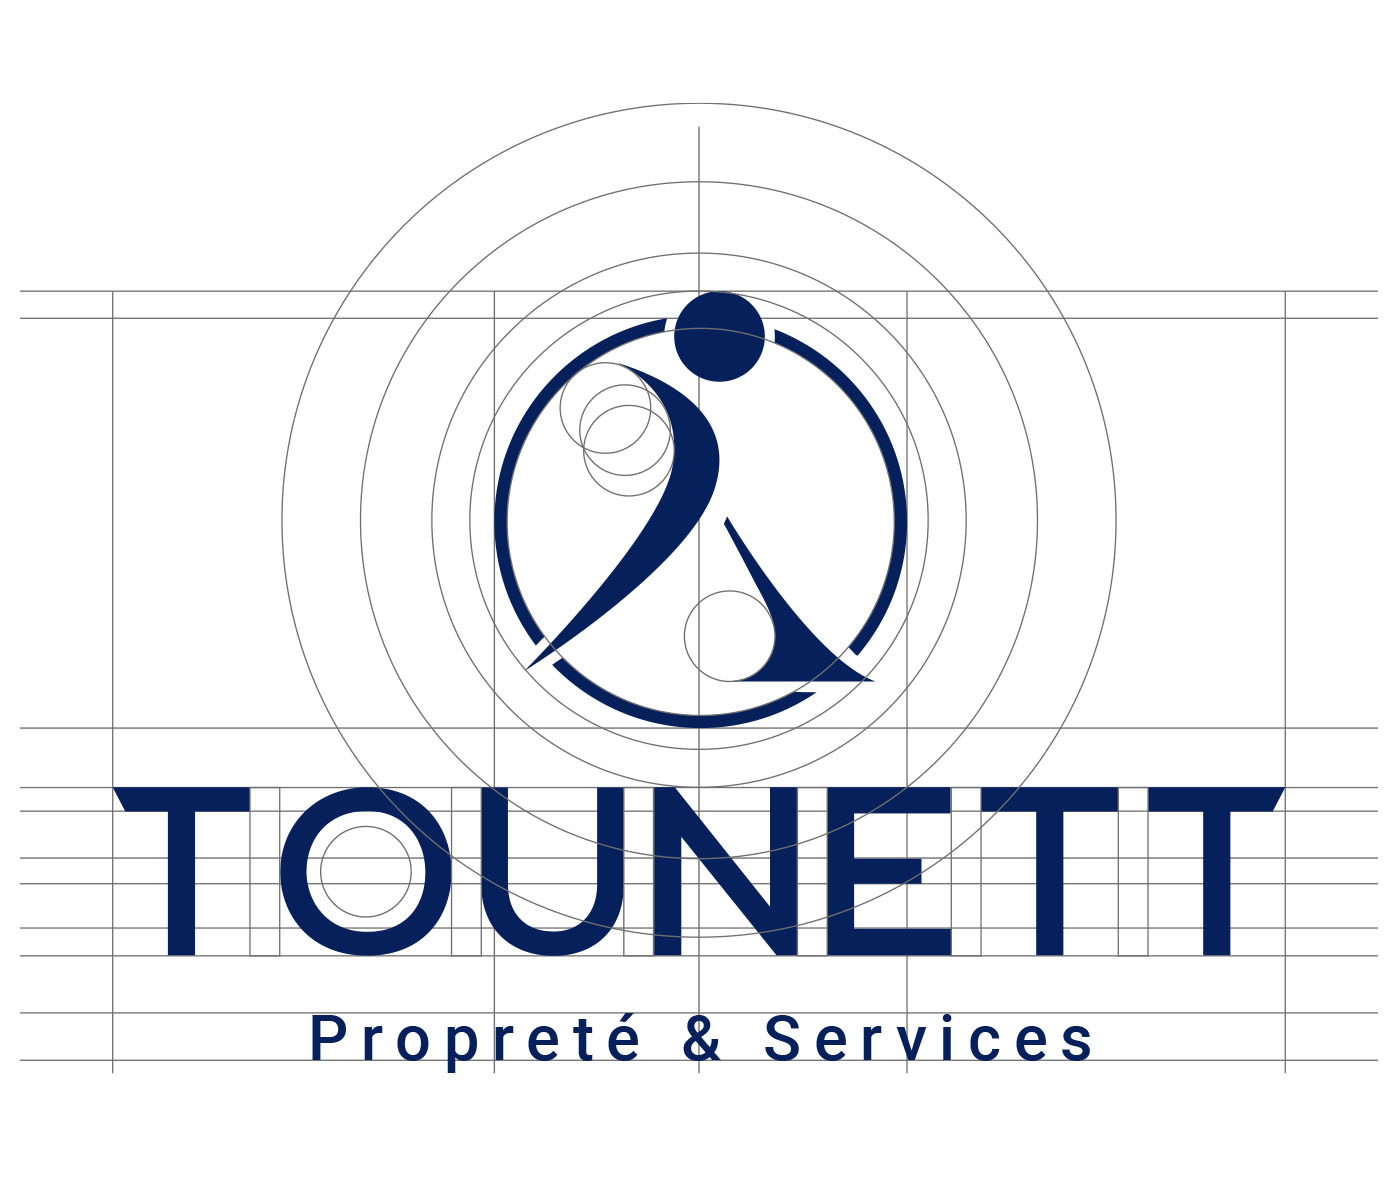 Logo-construction-toutnett